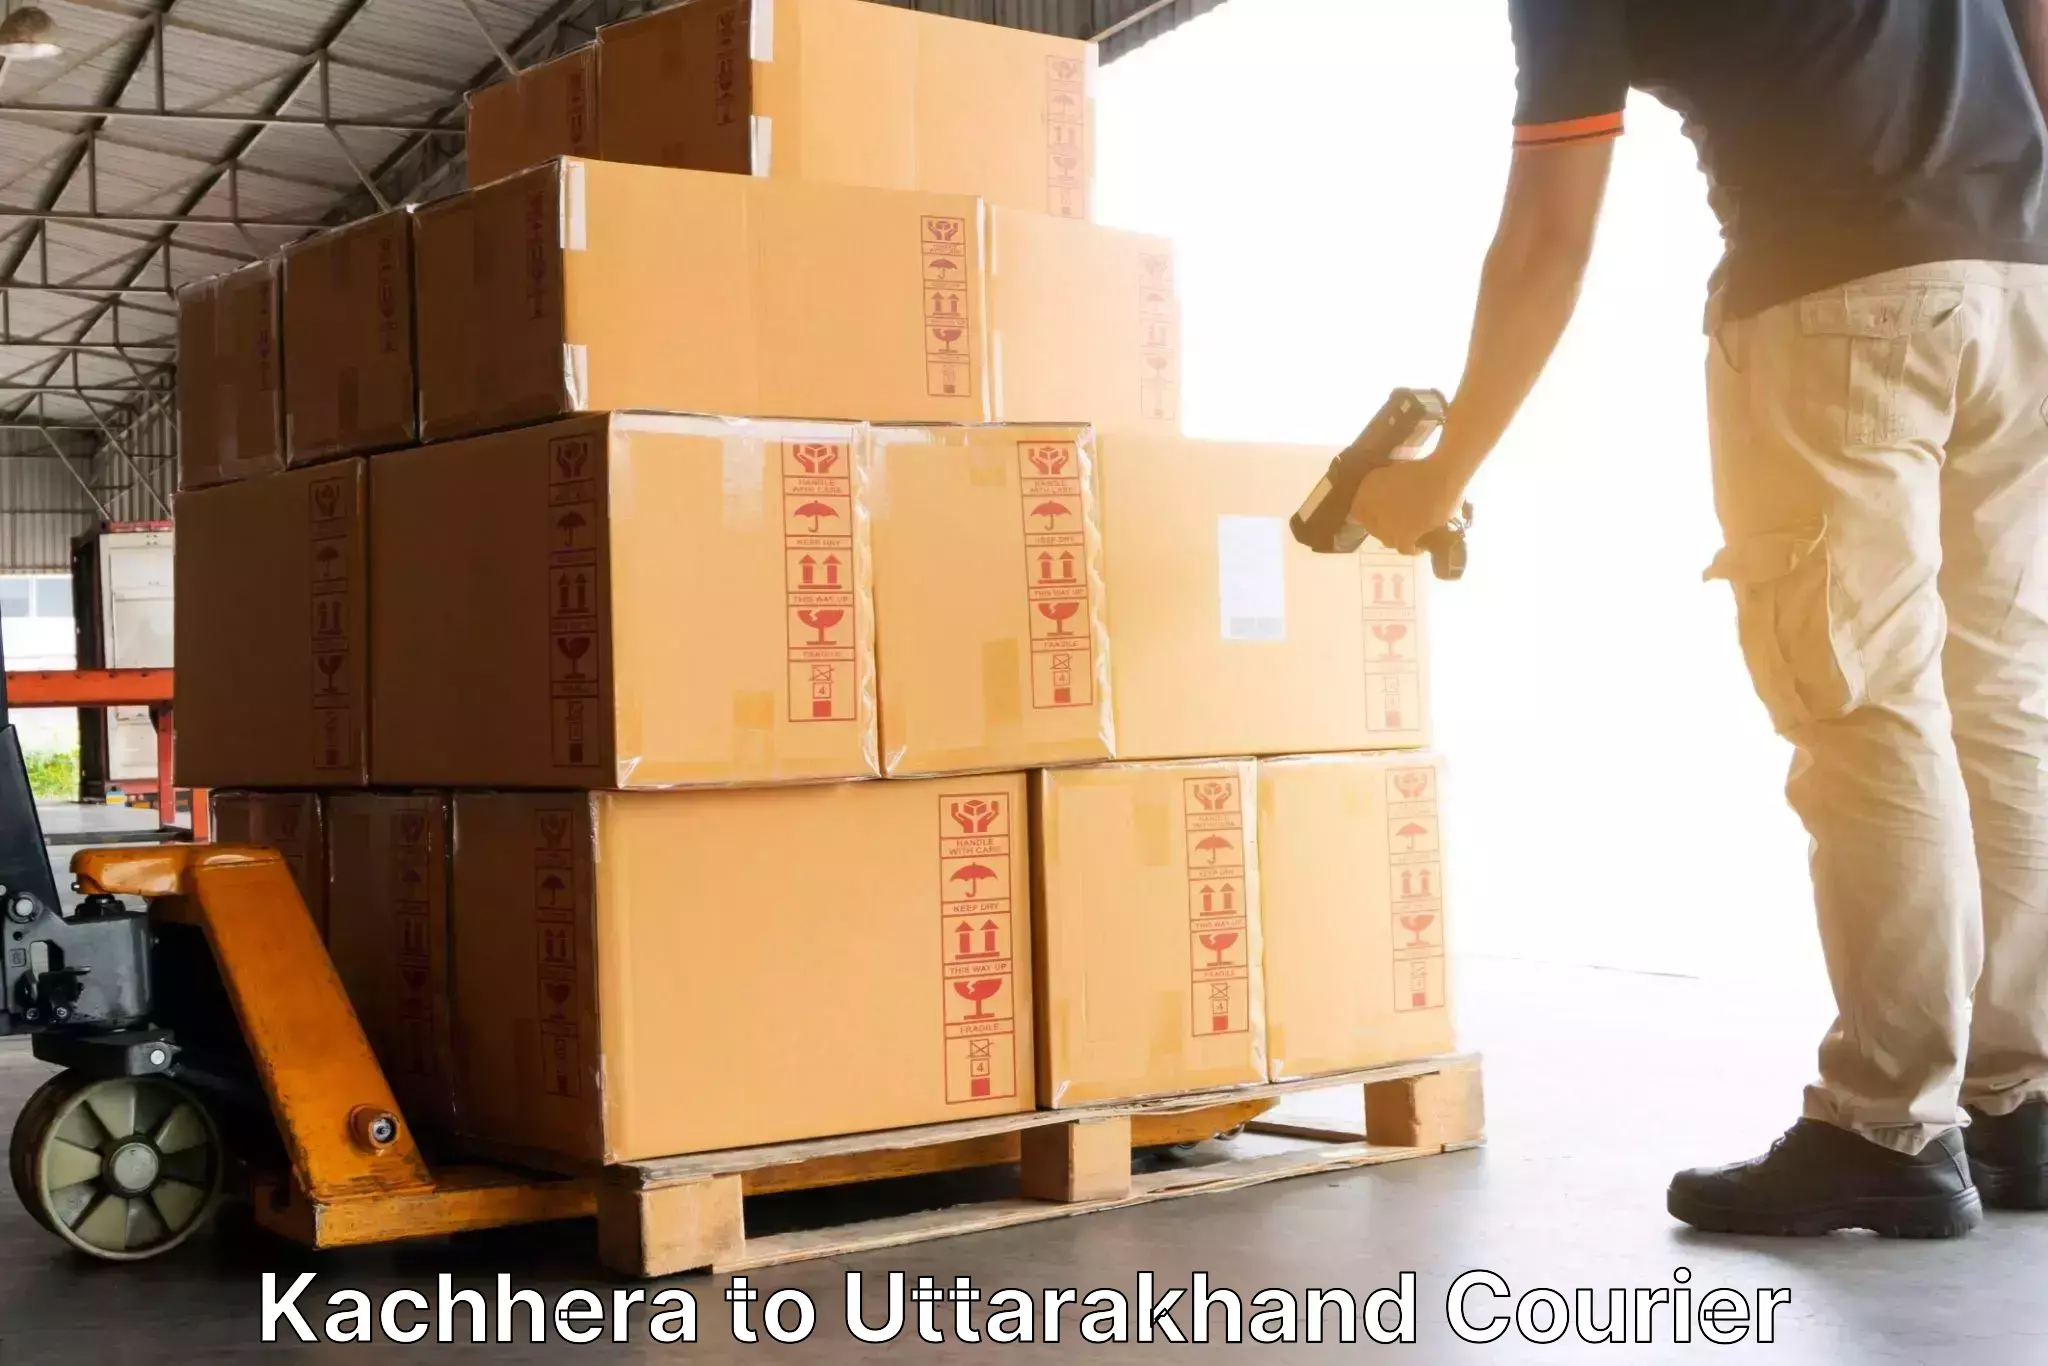 Courier service partnerships Kachhera to Bhagwanpur